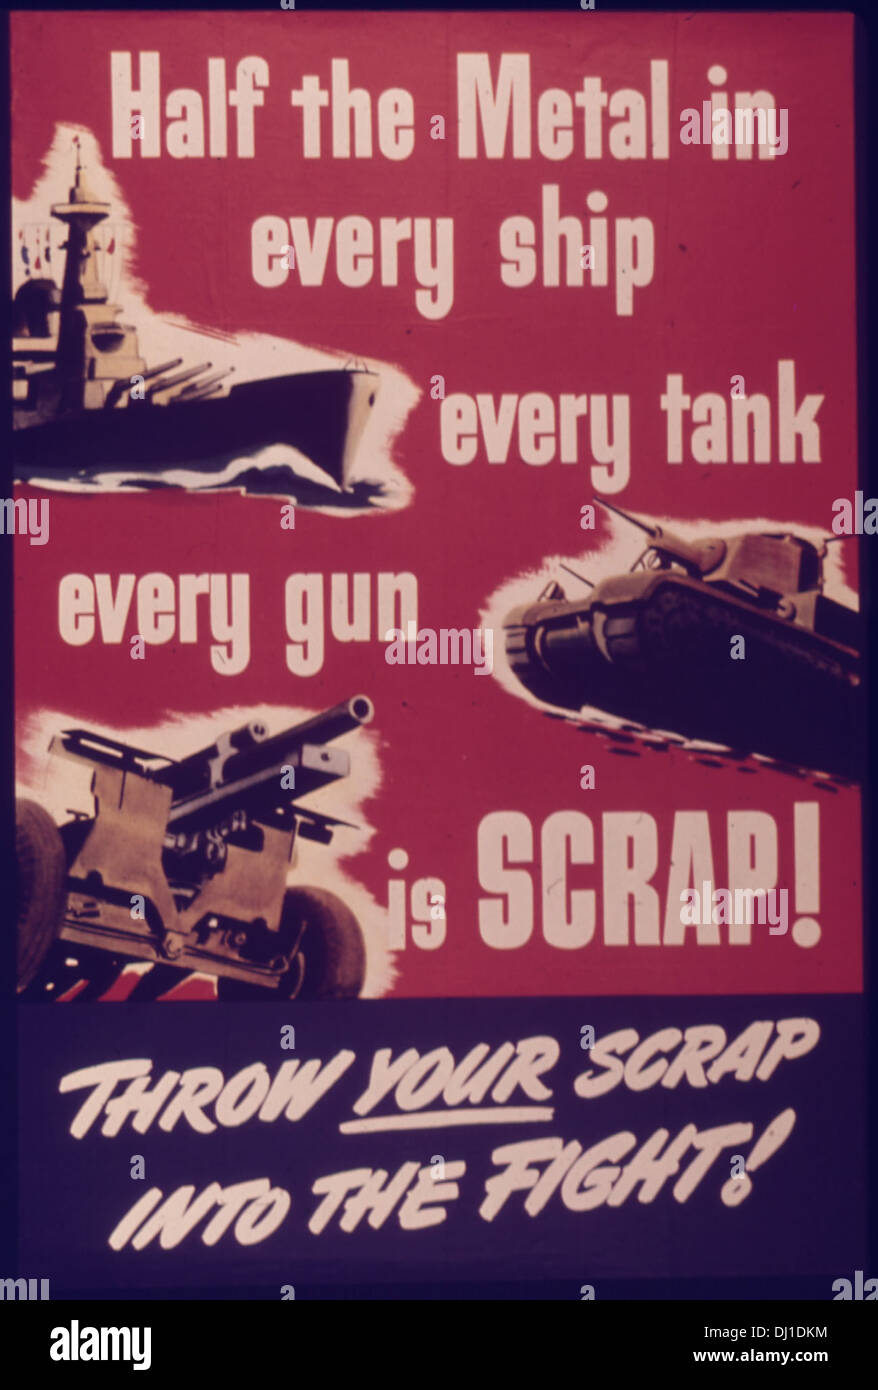 Original Vintage WWII Poster Half the Metal in Every Ship Tank Gun Scrap  c1943 – The Ross Art Group